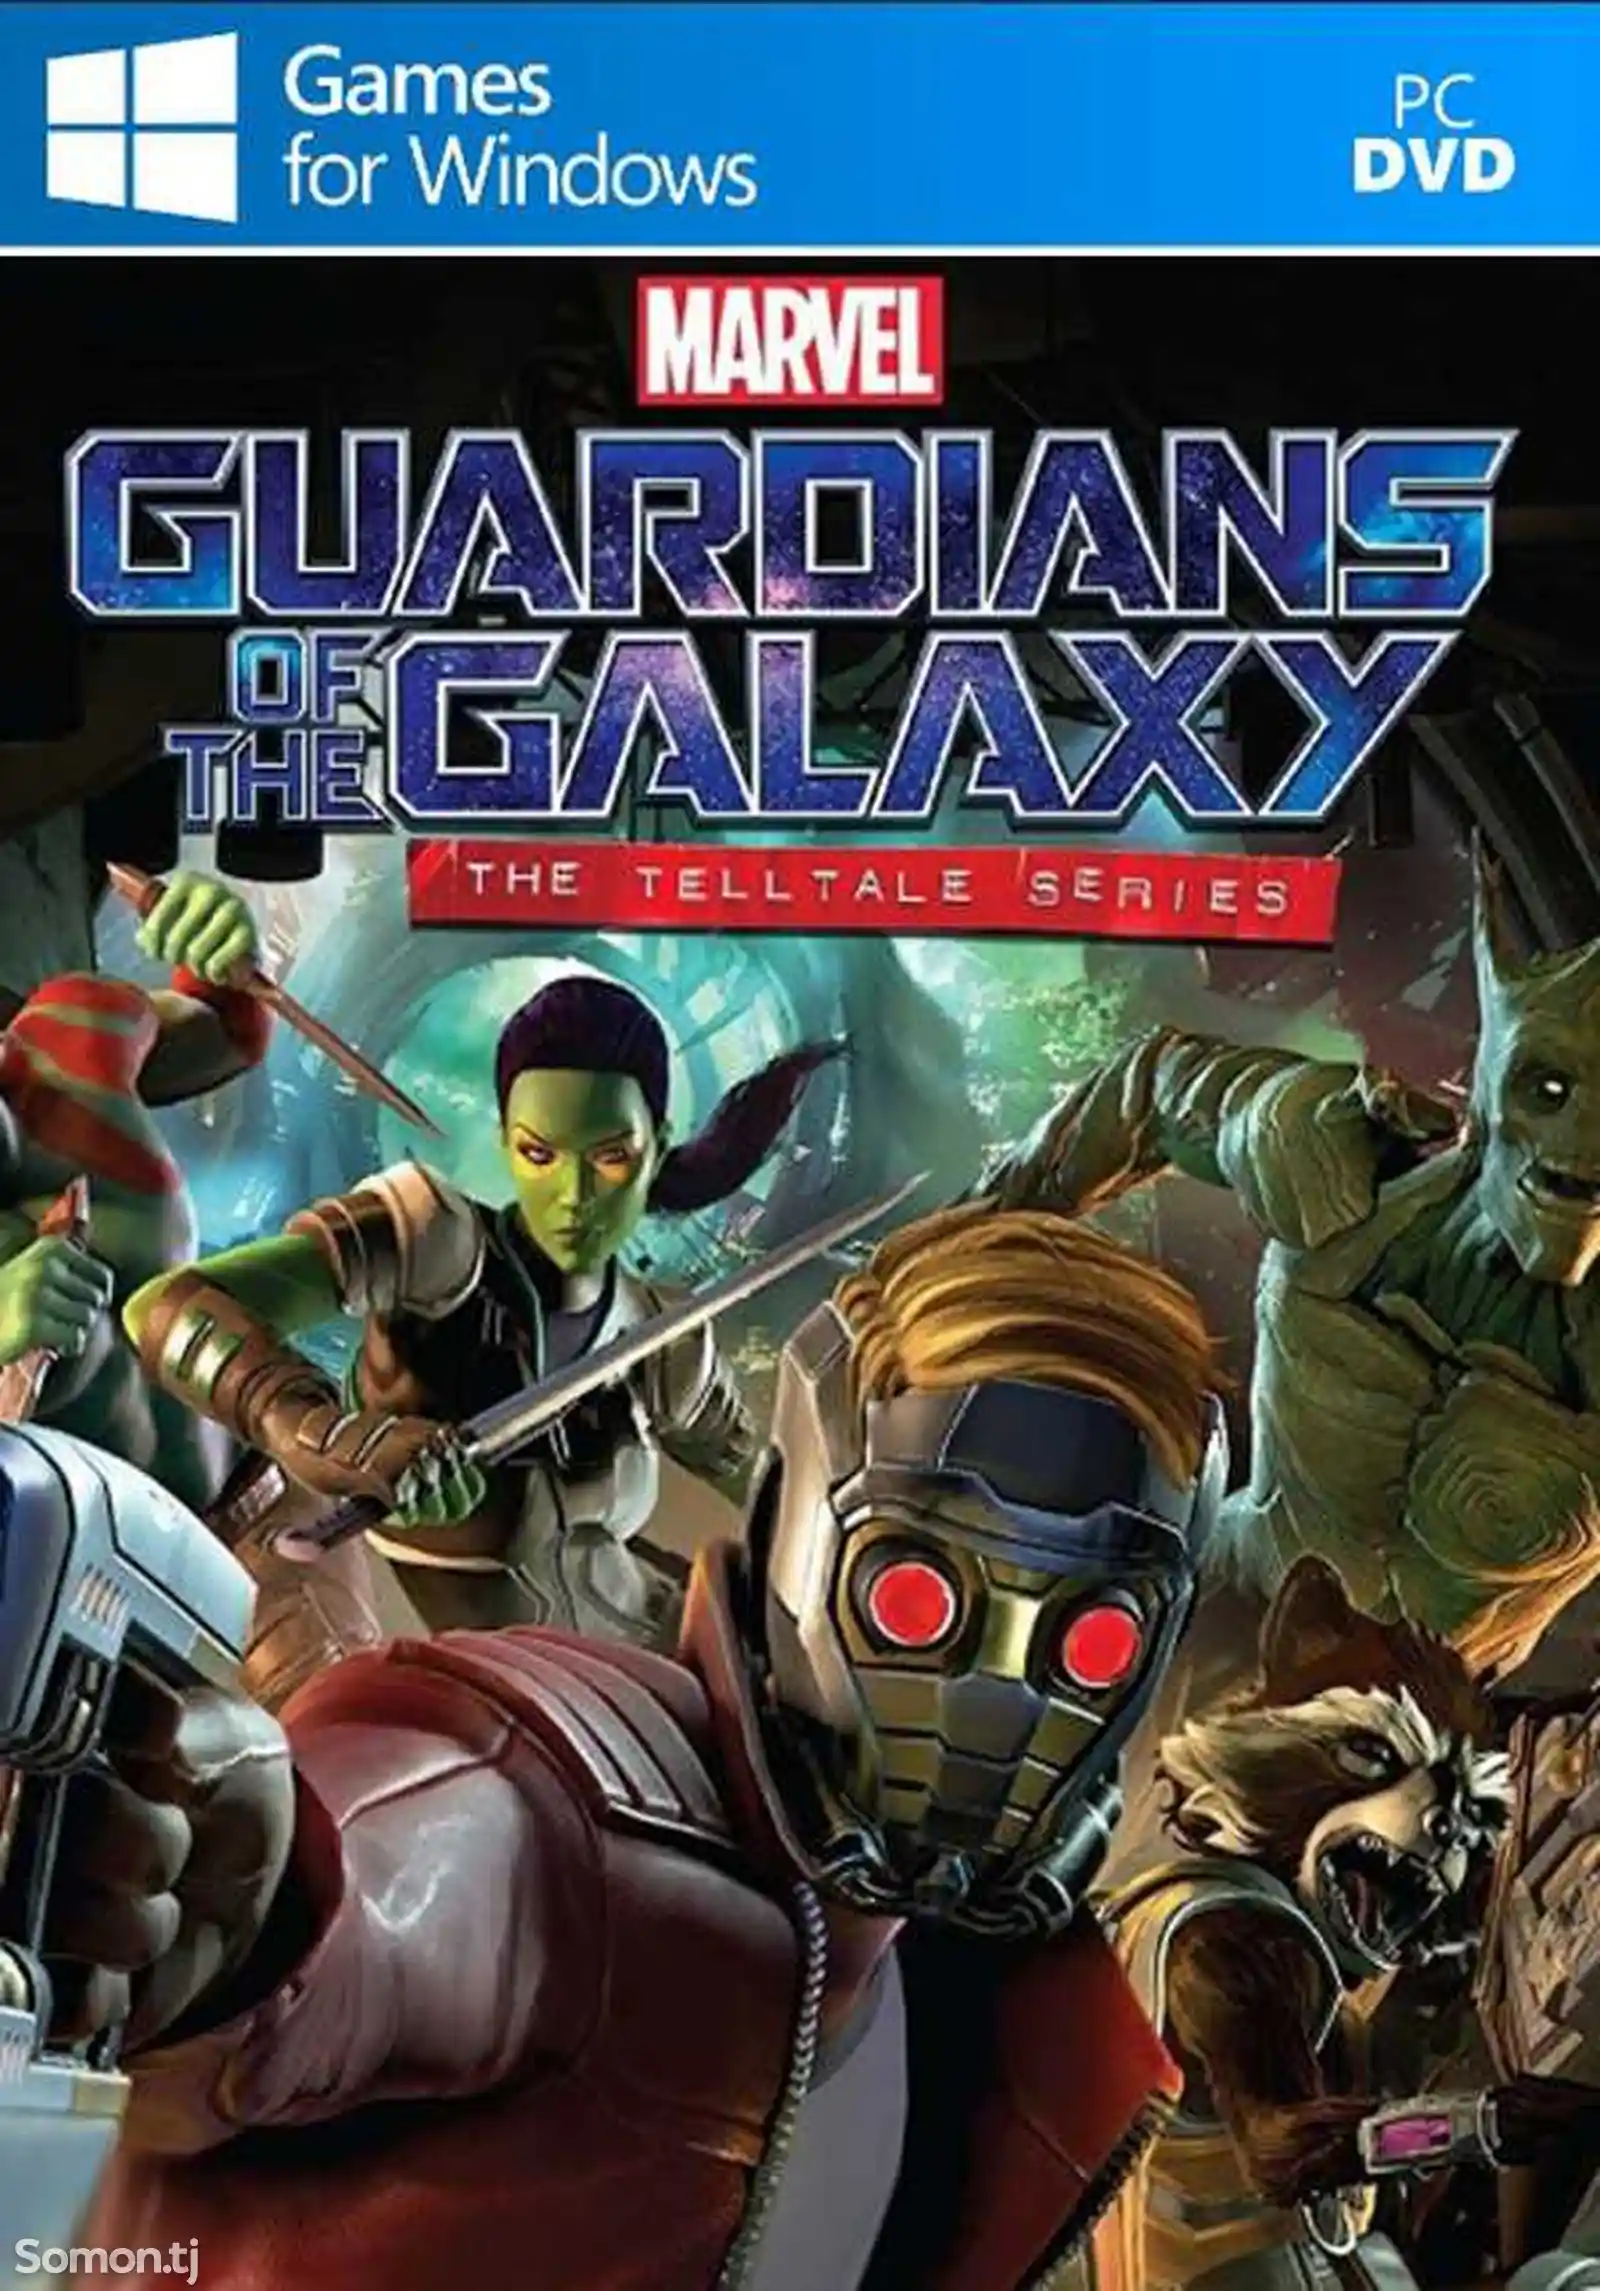 Игра Marvel guardians of the galaxy the telltale series для компьютера-пк-pc-1